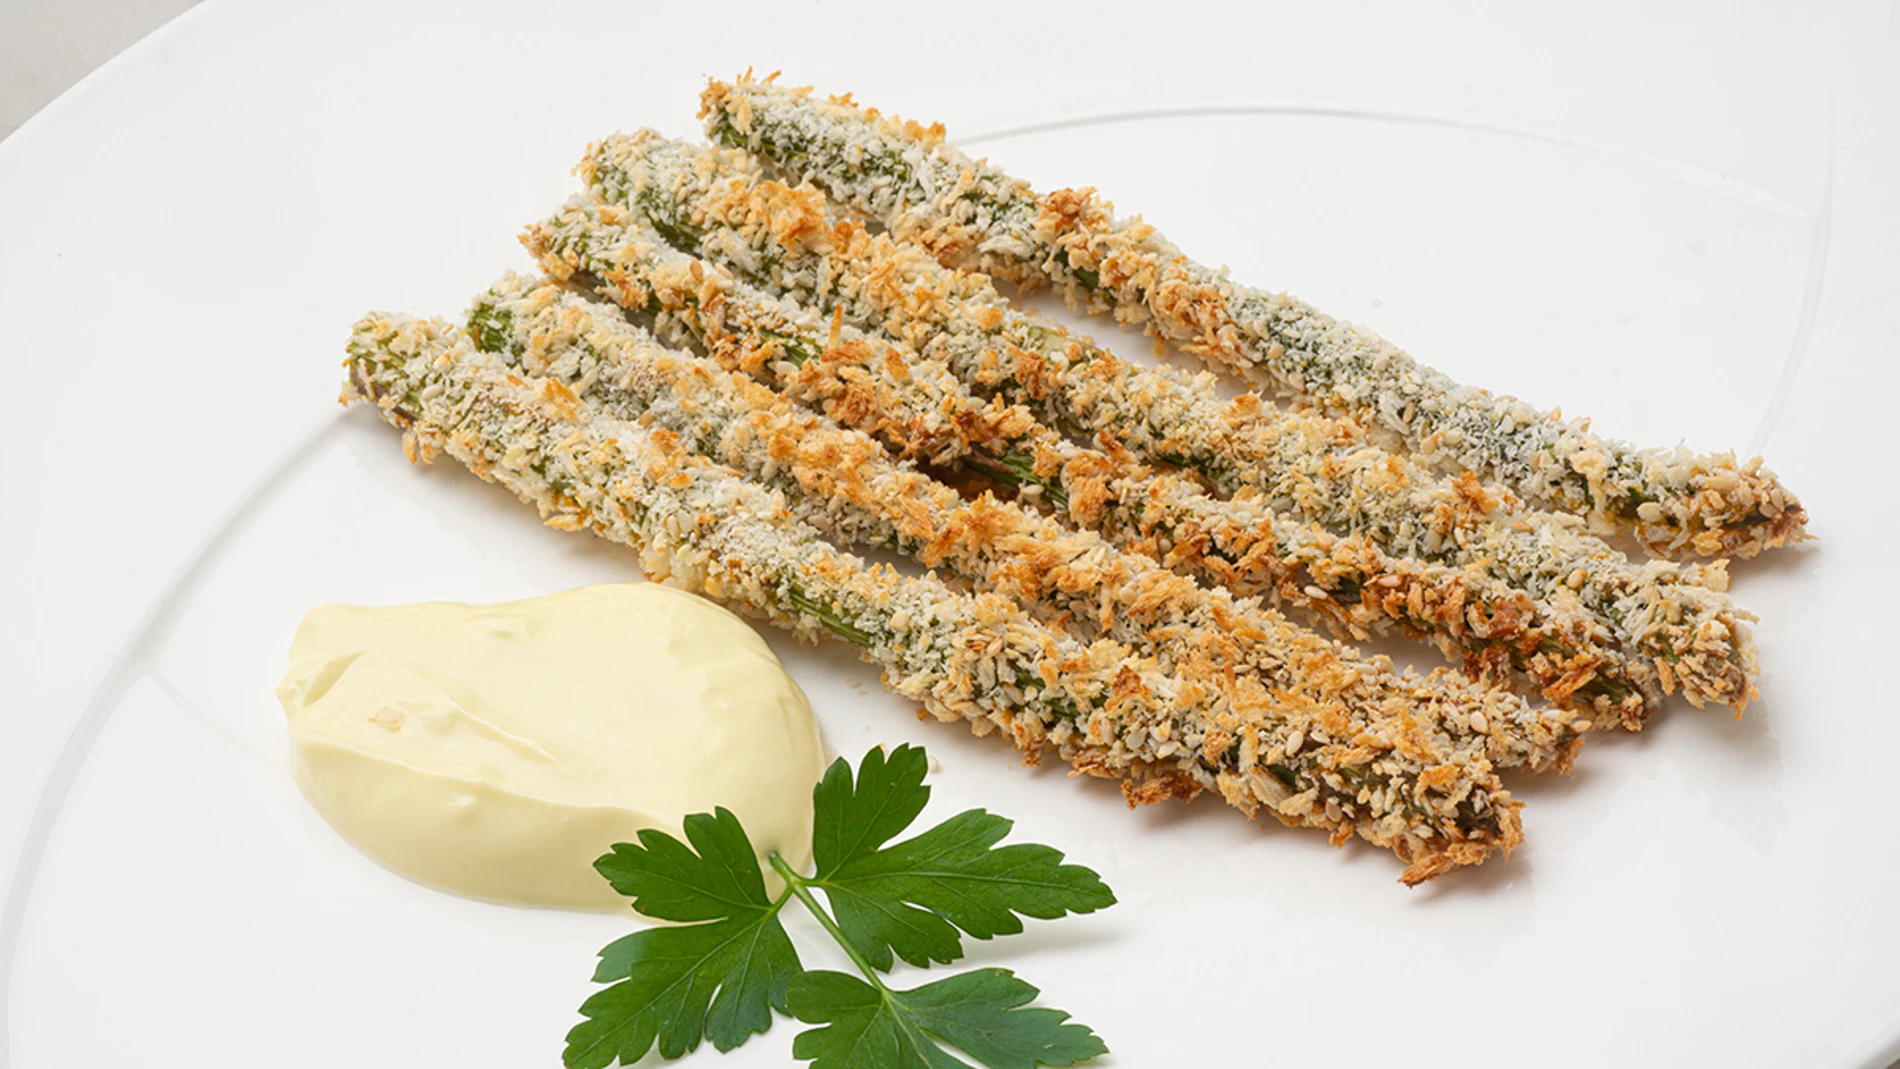 La receta de Arguiñano, ¡perfecta para adelgazar!: espárragos verdes con lactonesa